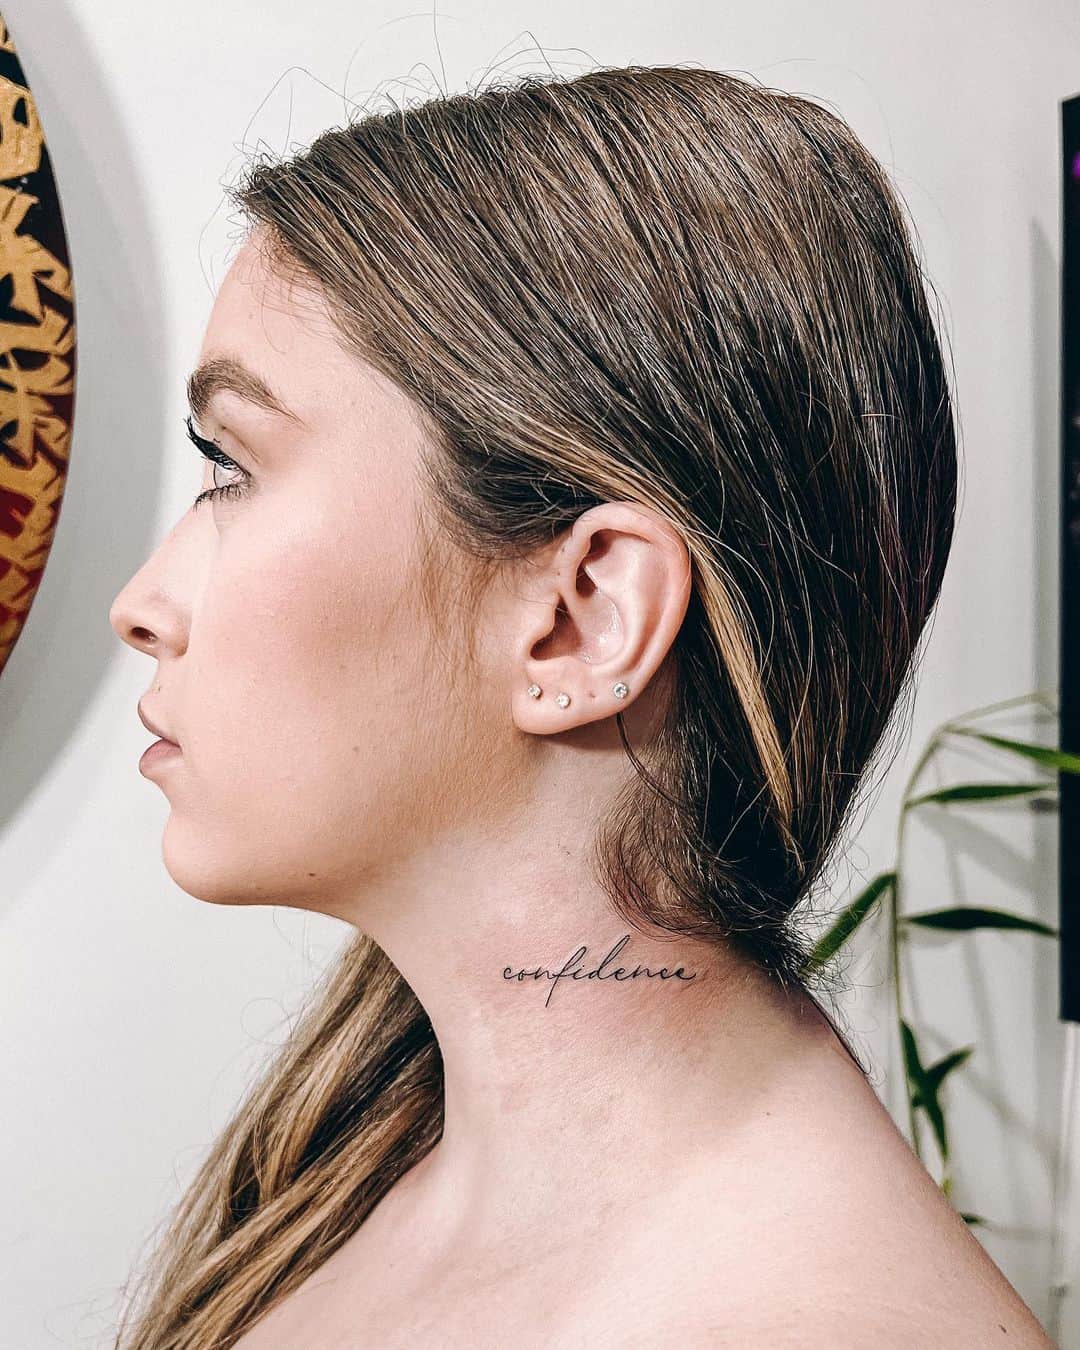 24 Neck Tattoos for Women